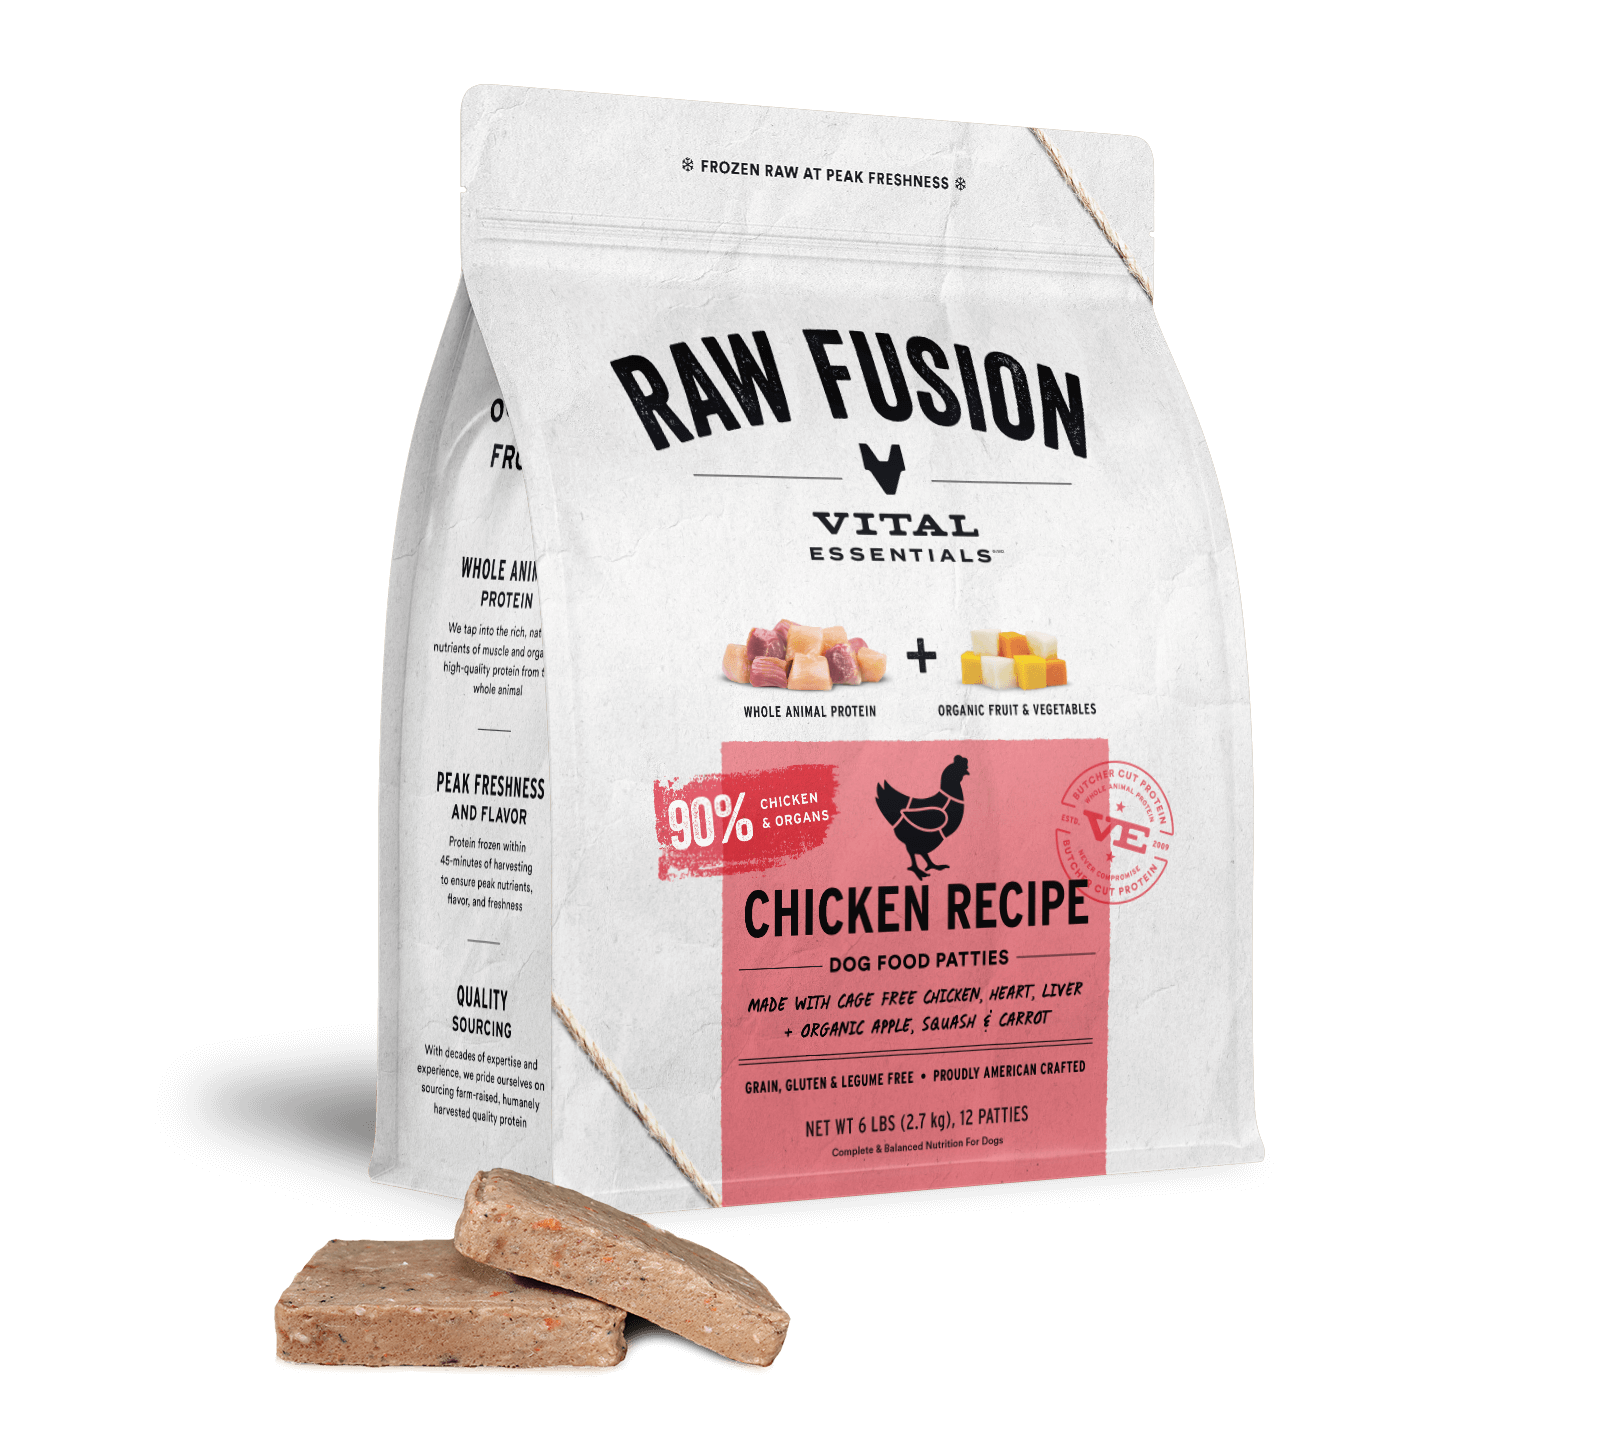 Vital Essentials RAW FUSION Frozen Raw Chicken Recipe Dog Food Patties - Health/First Aid